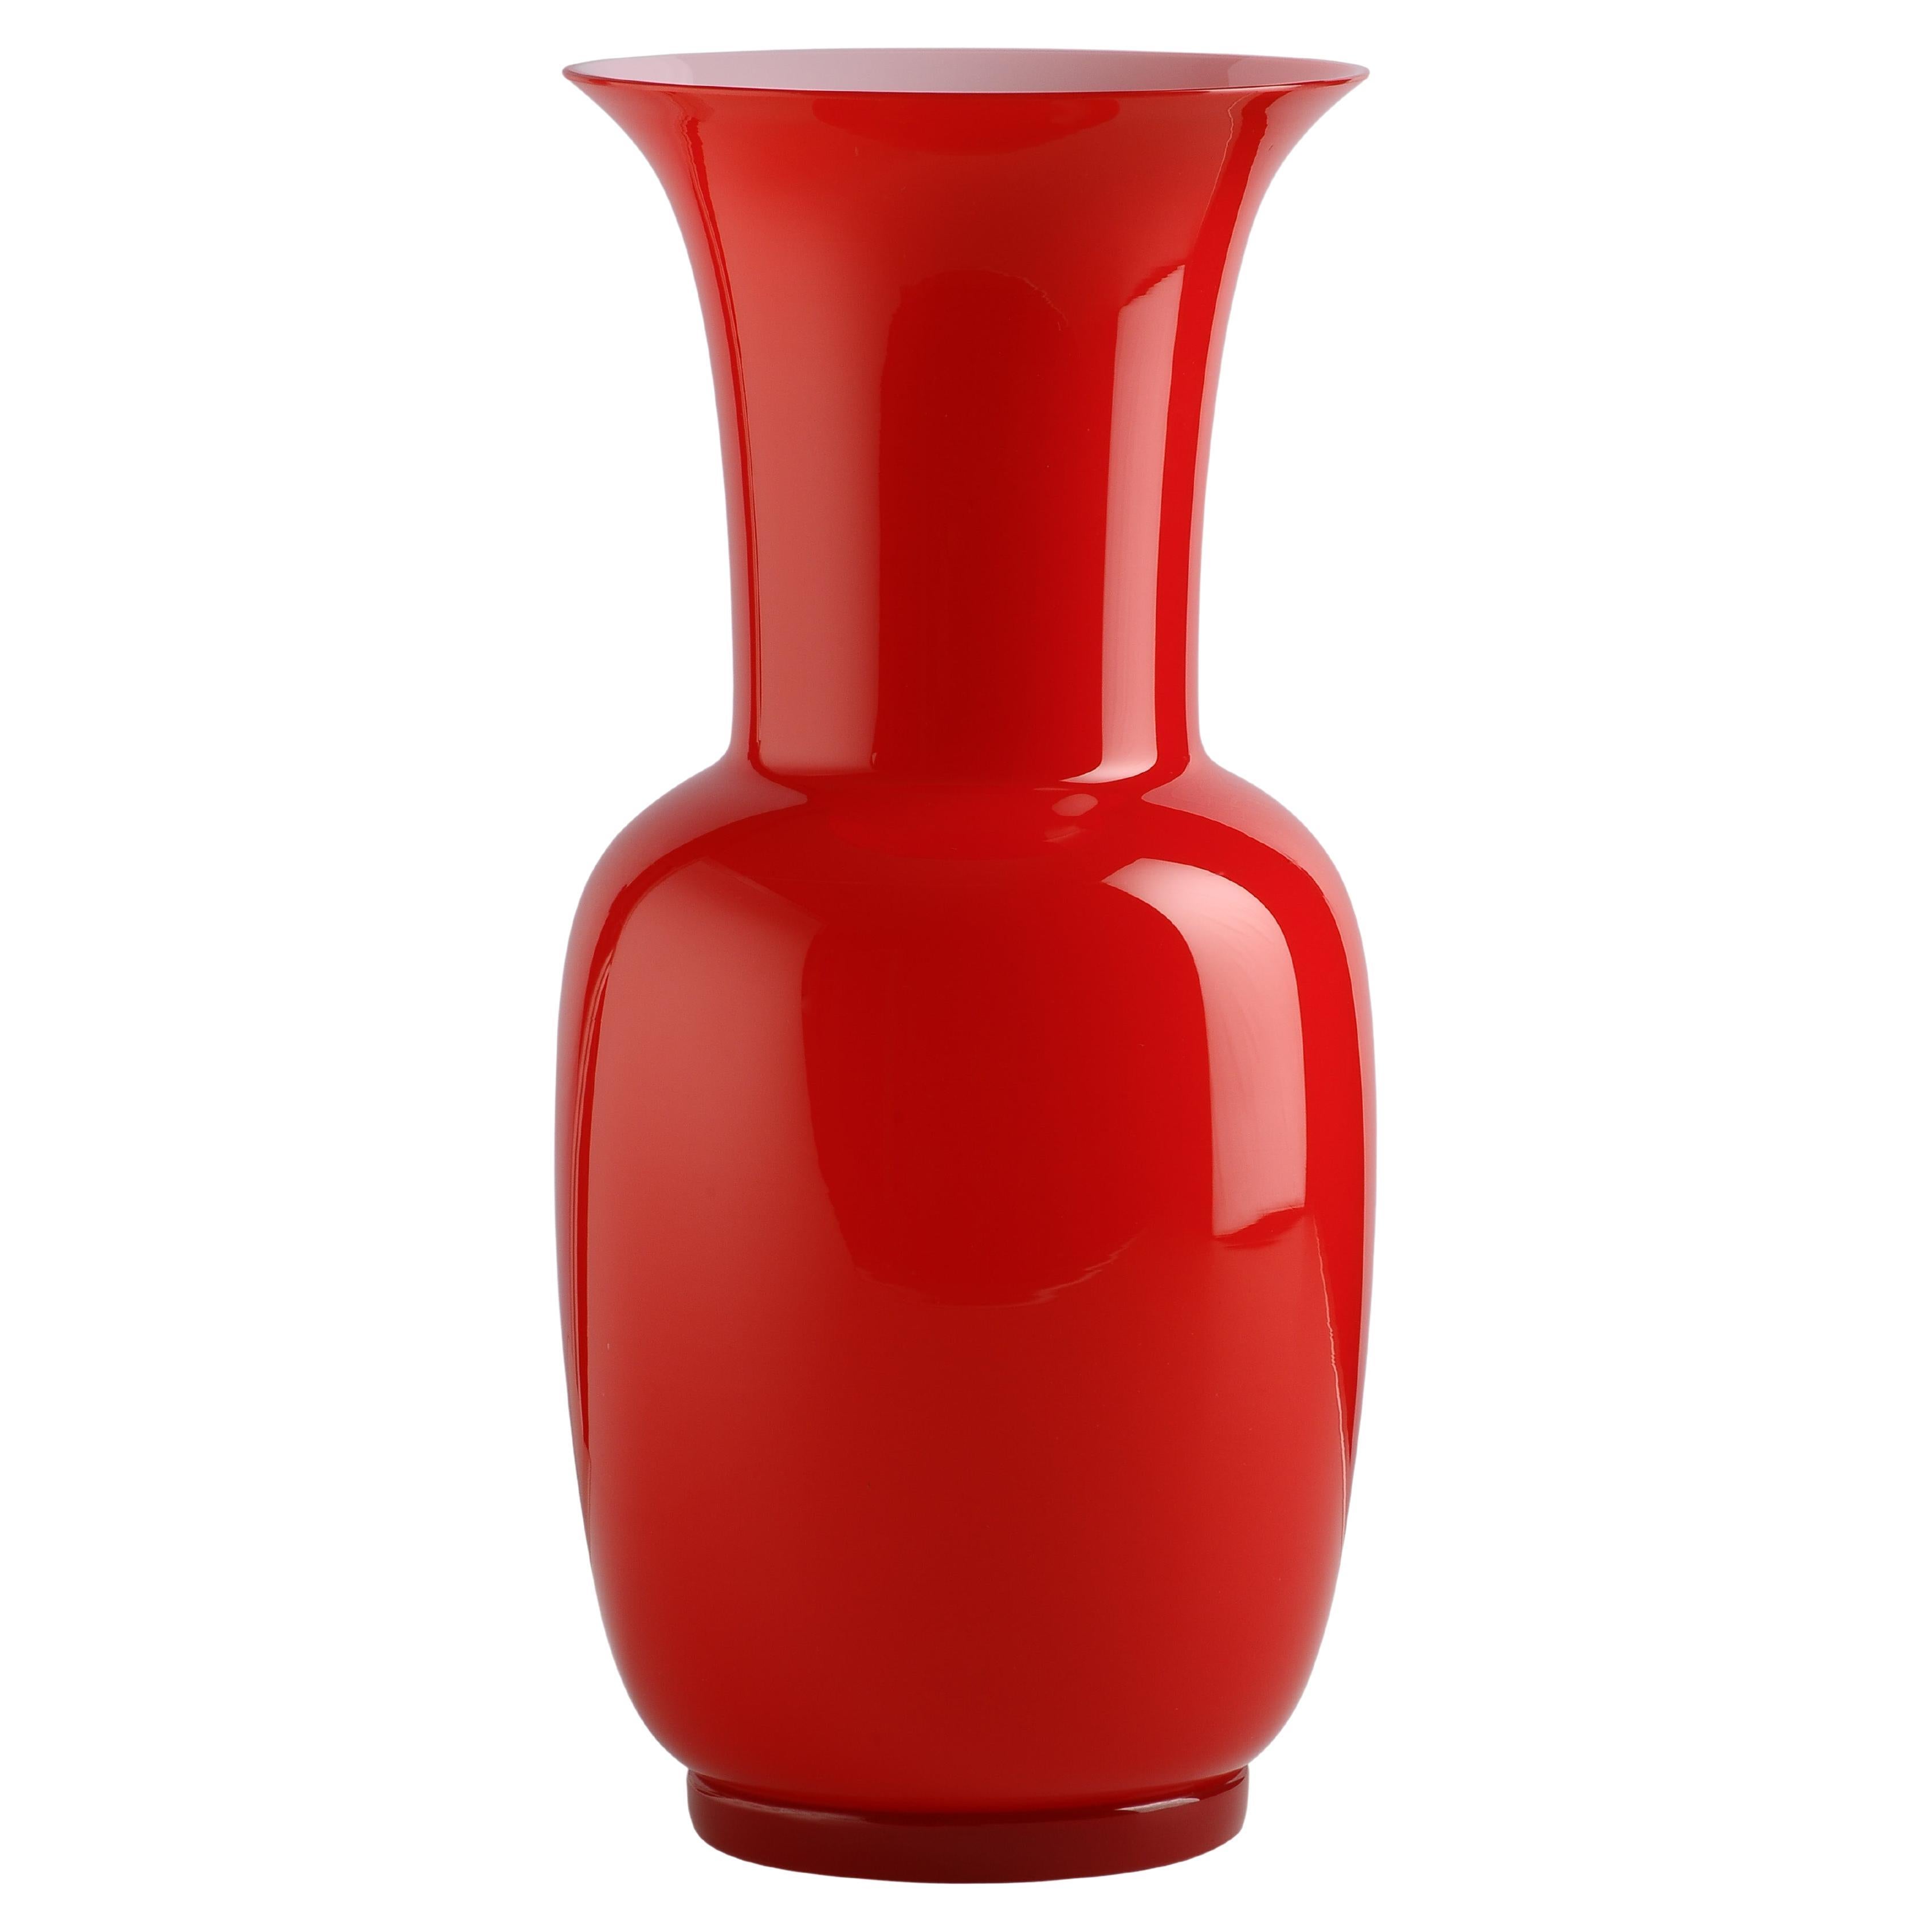 Opalino Glass Vase in Red Milk White Inside by Venini